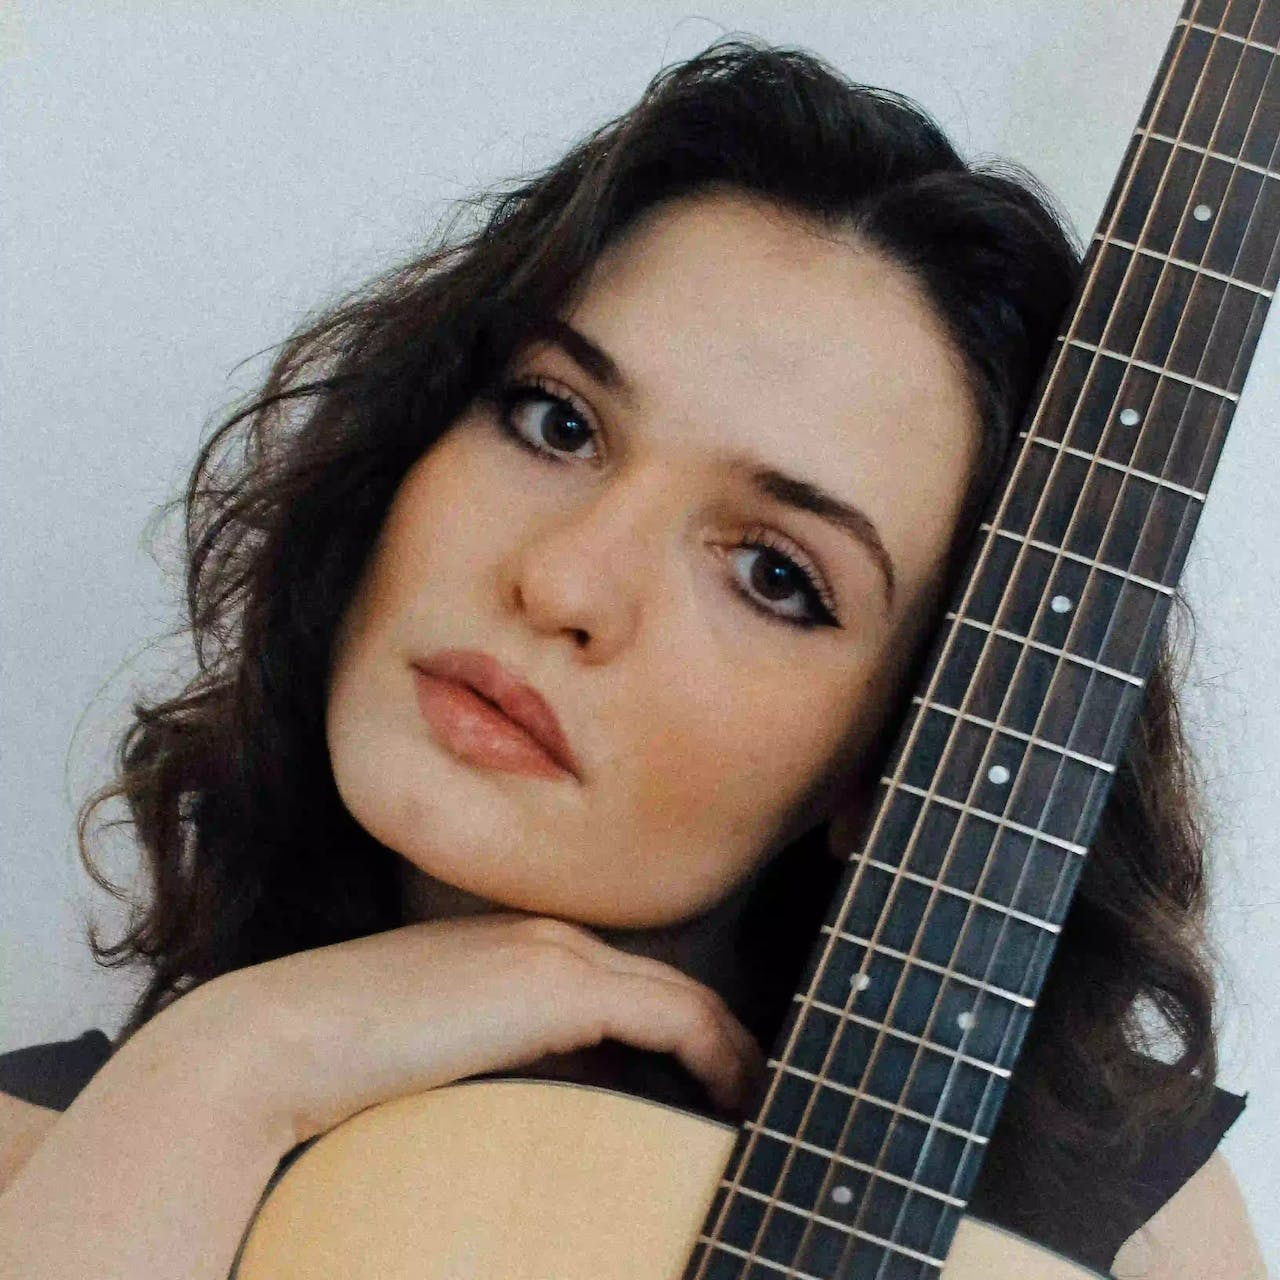 Female singer/songwriter, Violetta Zironi, posing elegantly with her acoustic guitar.